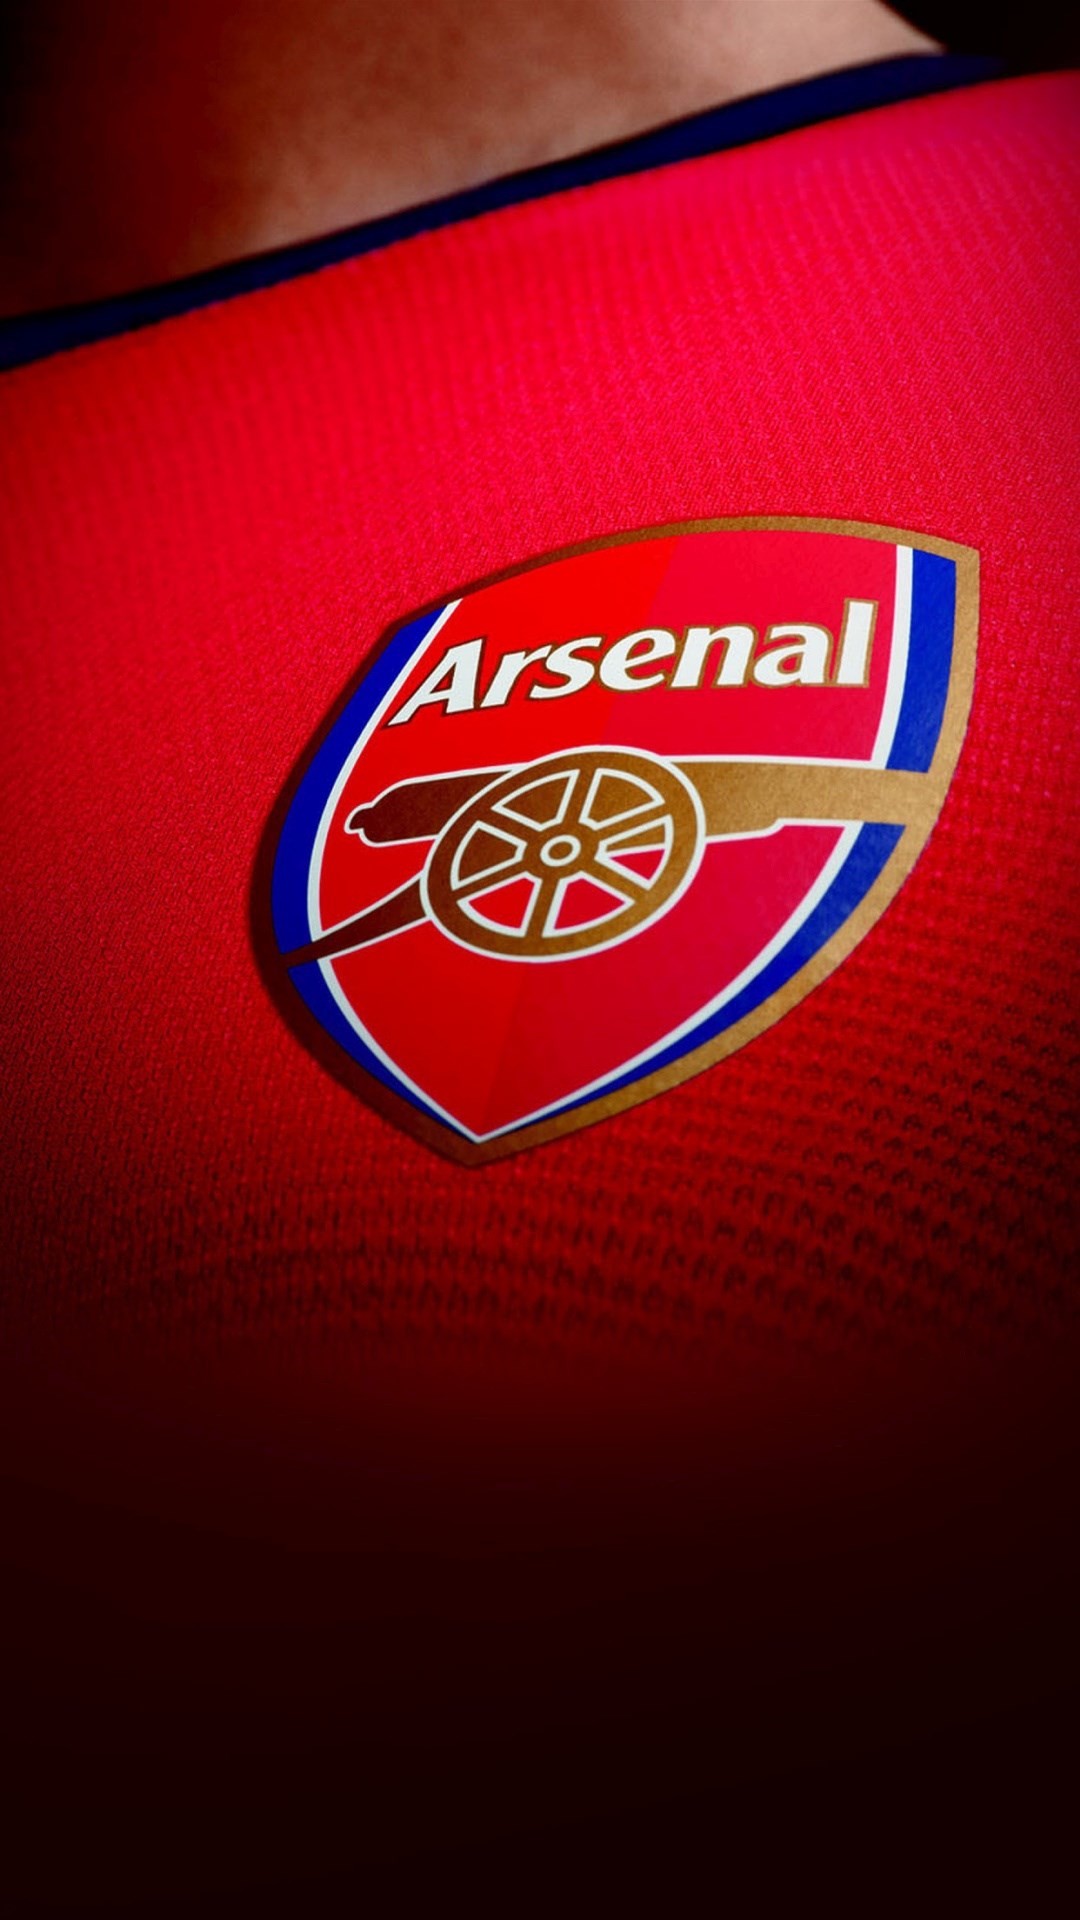 1080x1920 arsenal football team logo england soccer iphone wallpaper